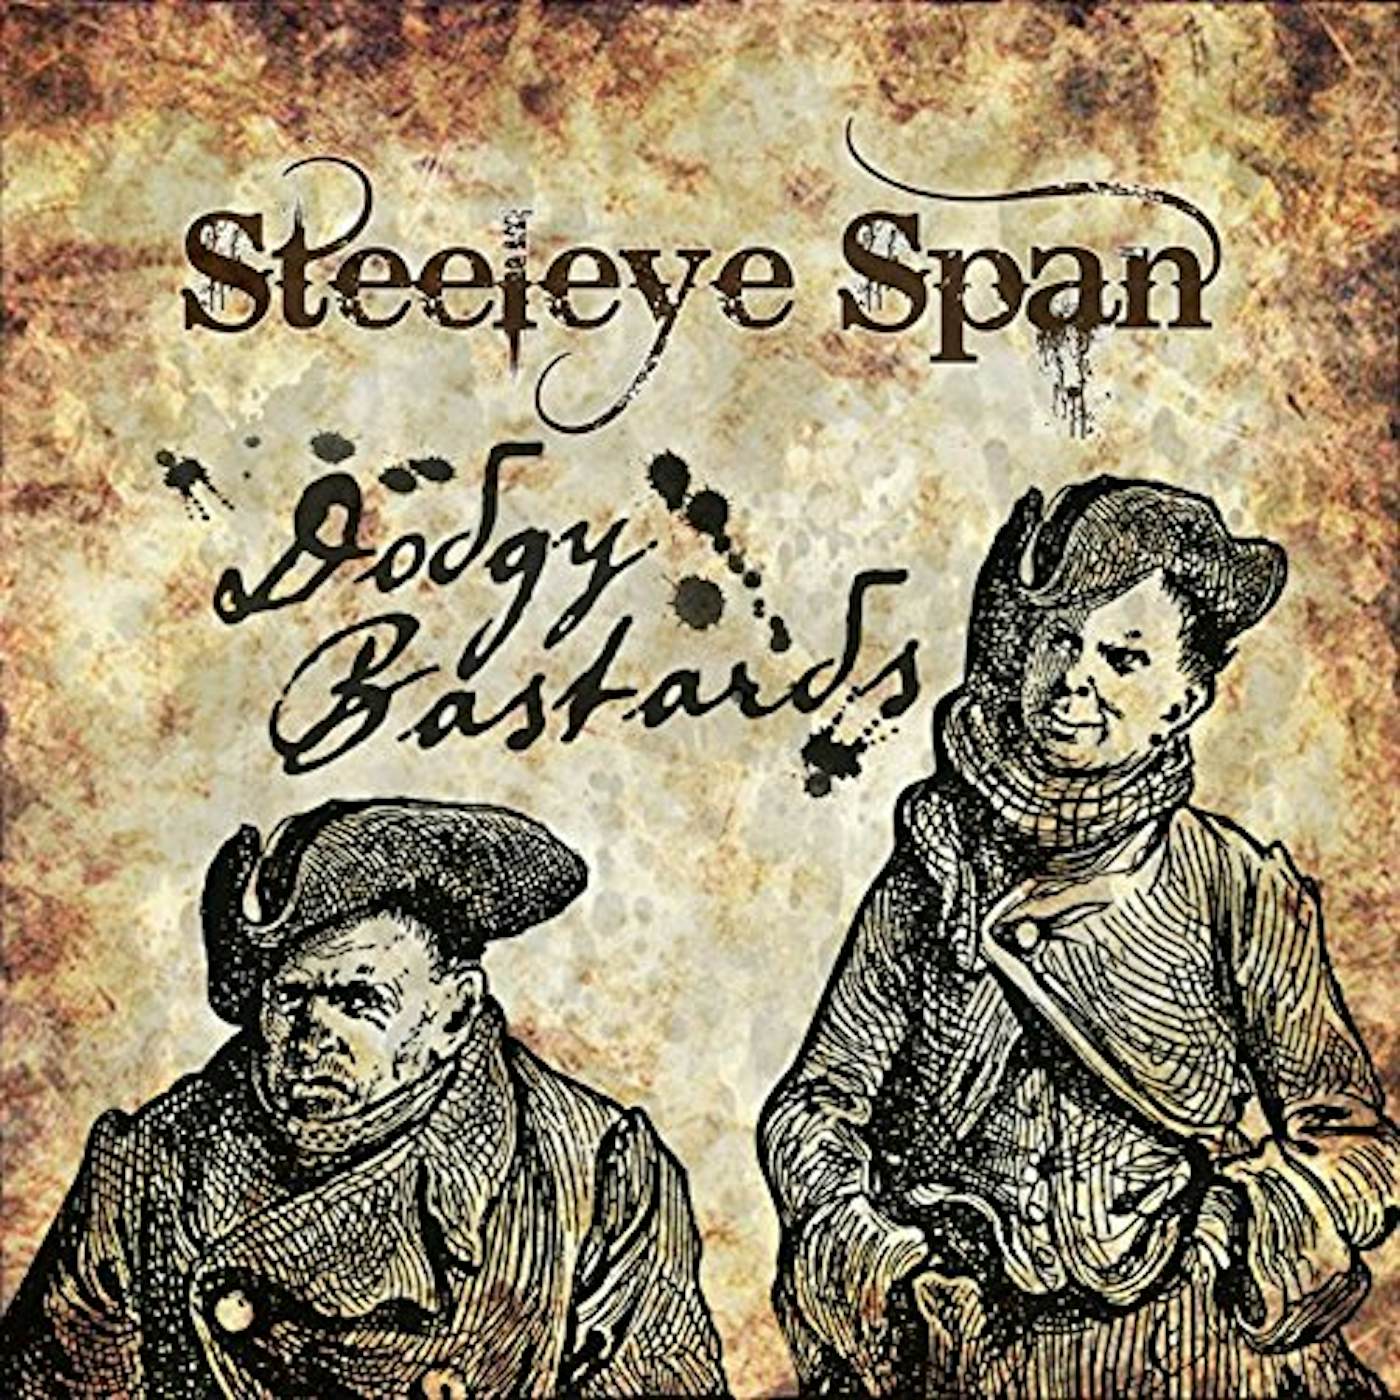 Steeleye Span DODGY BASTARDS CD